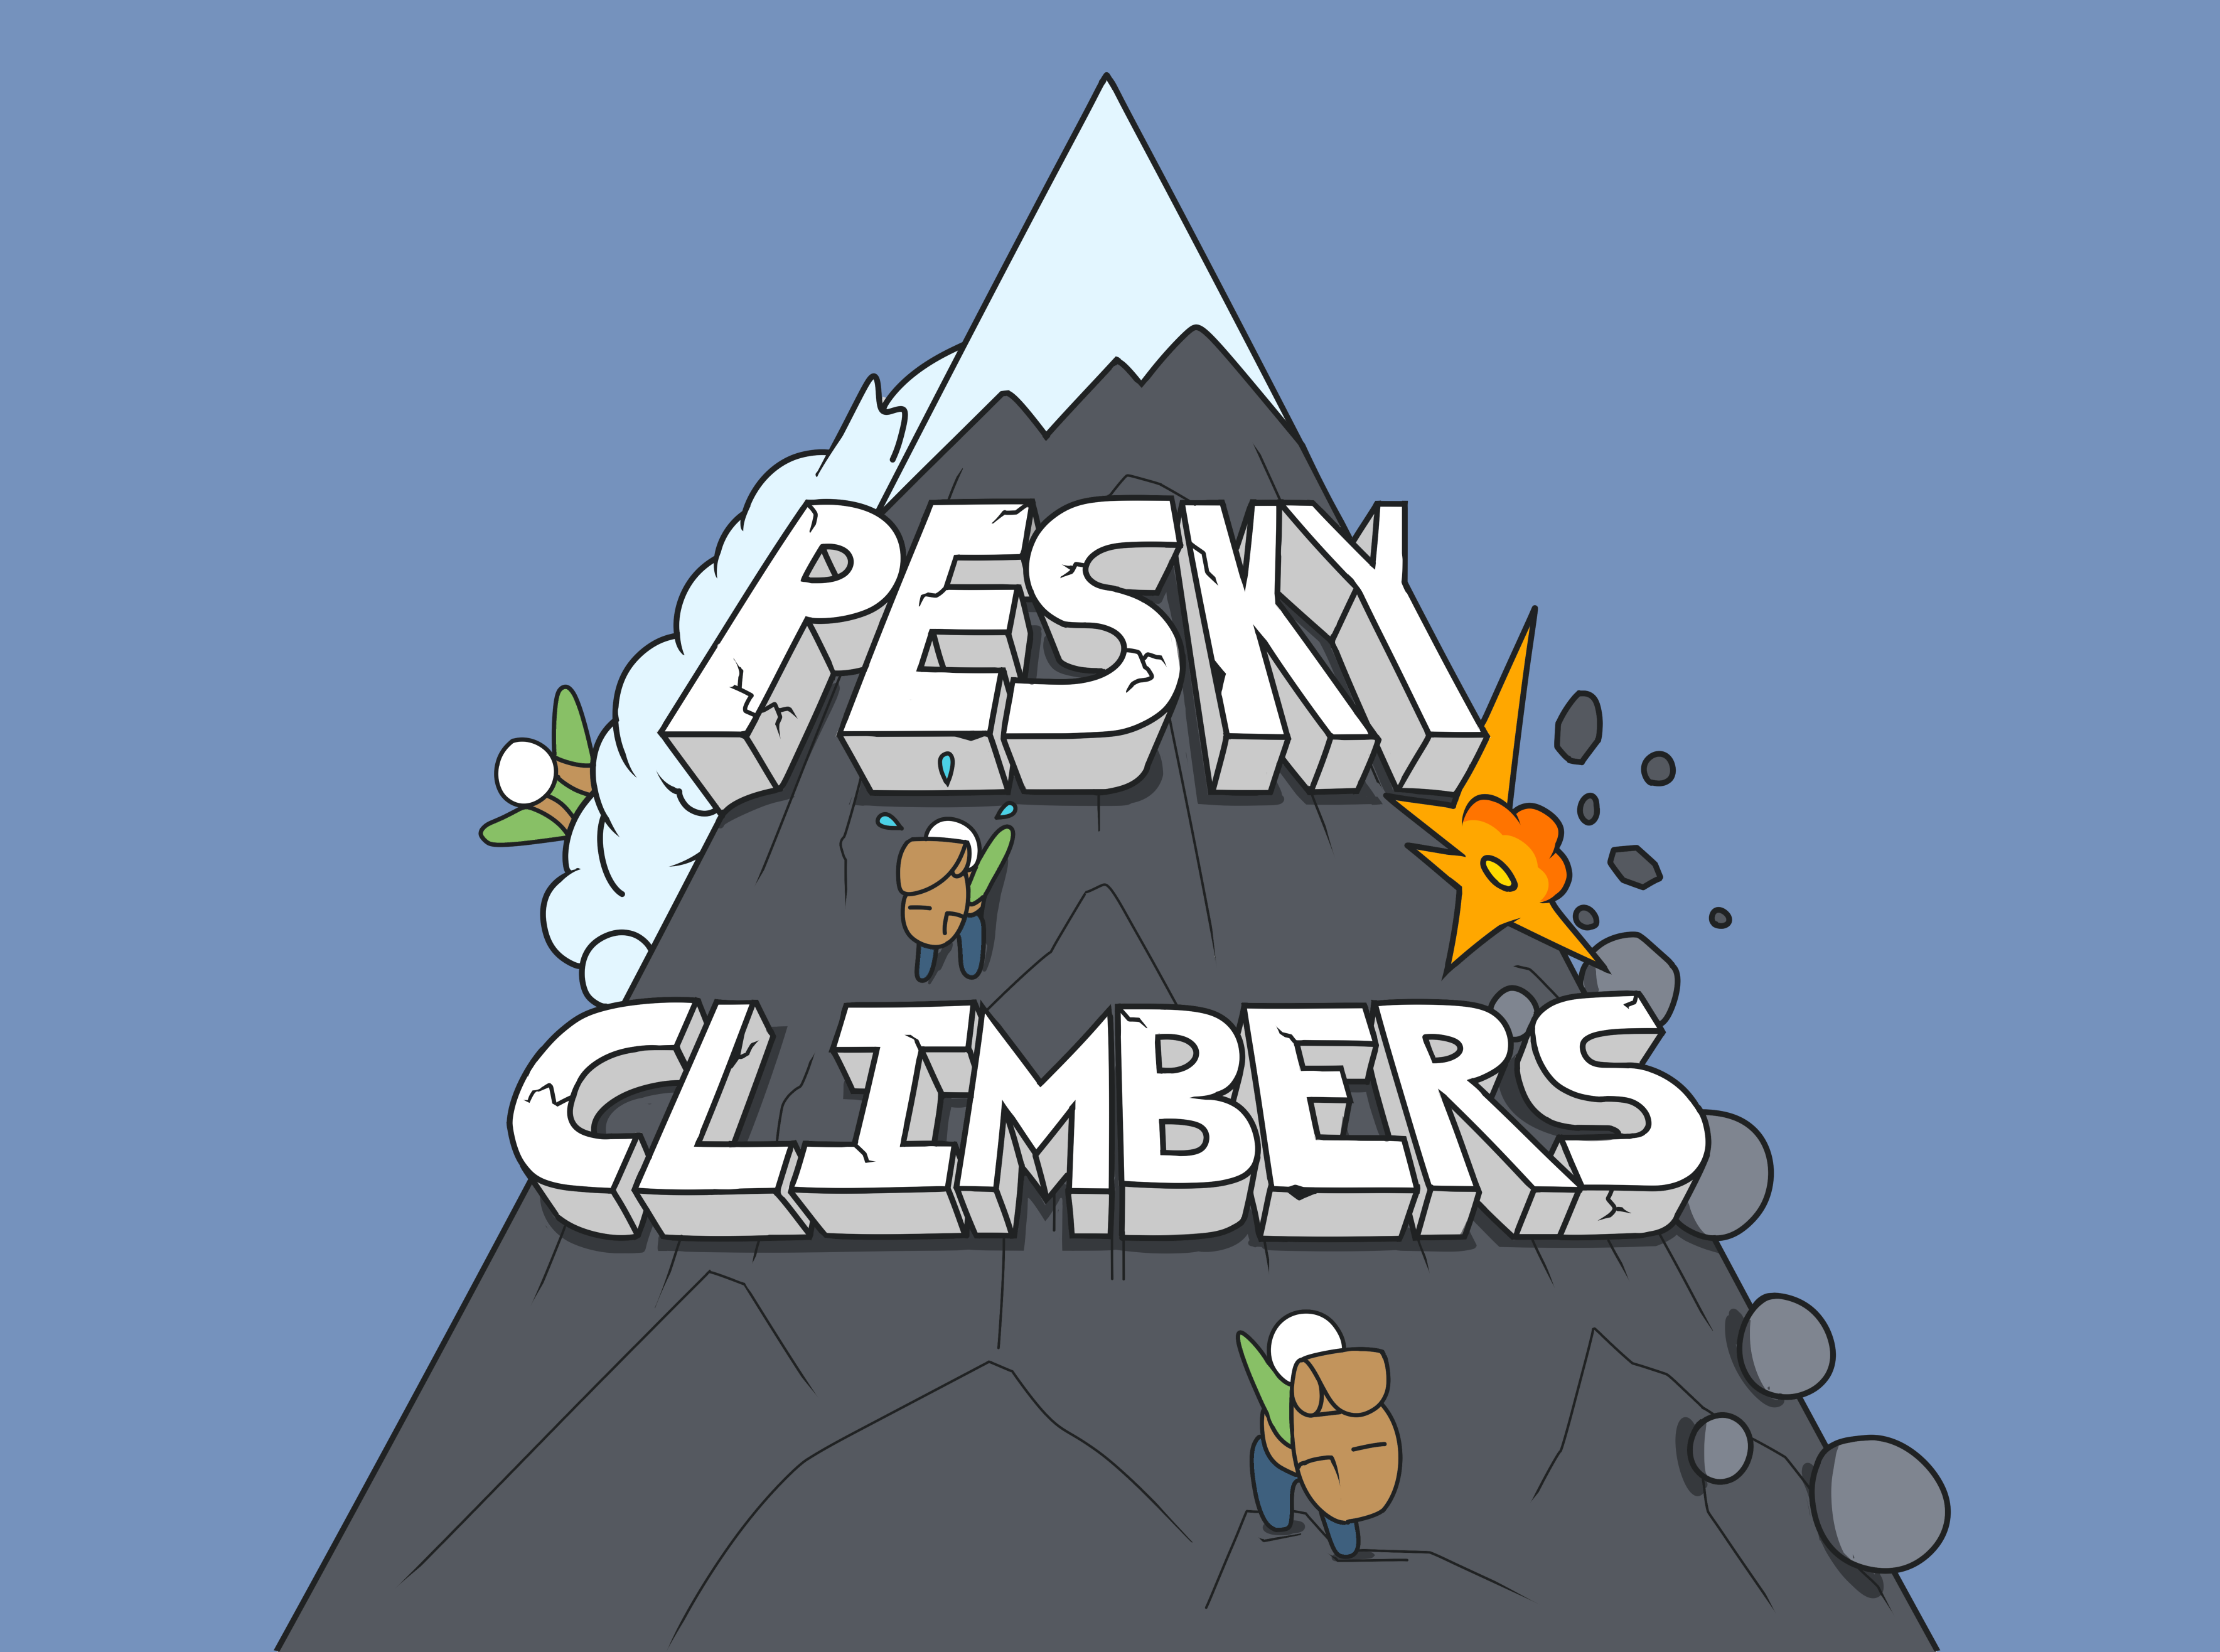 Pesky Climbers